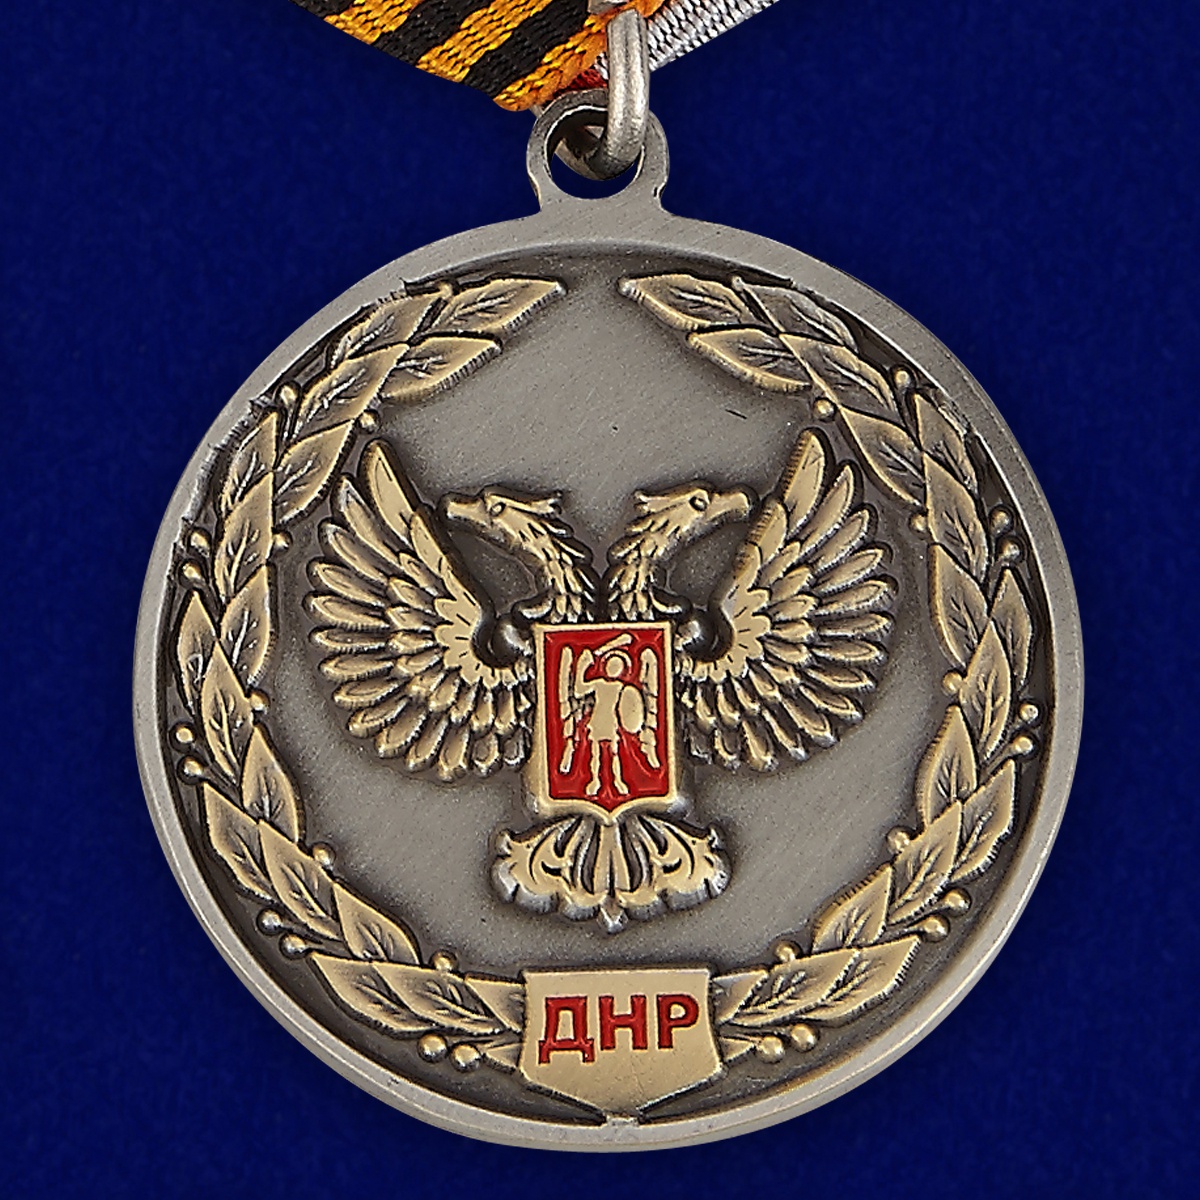 Медаль "За оборону Саур-Могилы" 